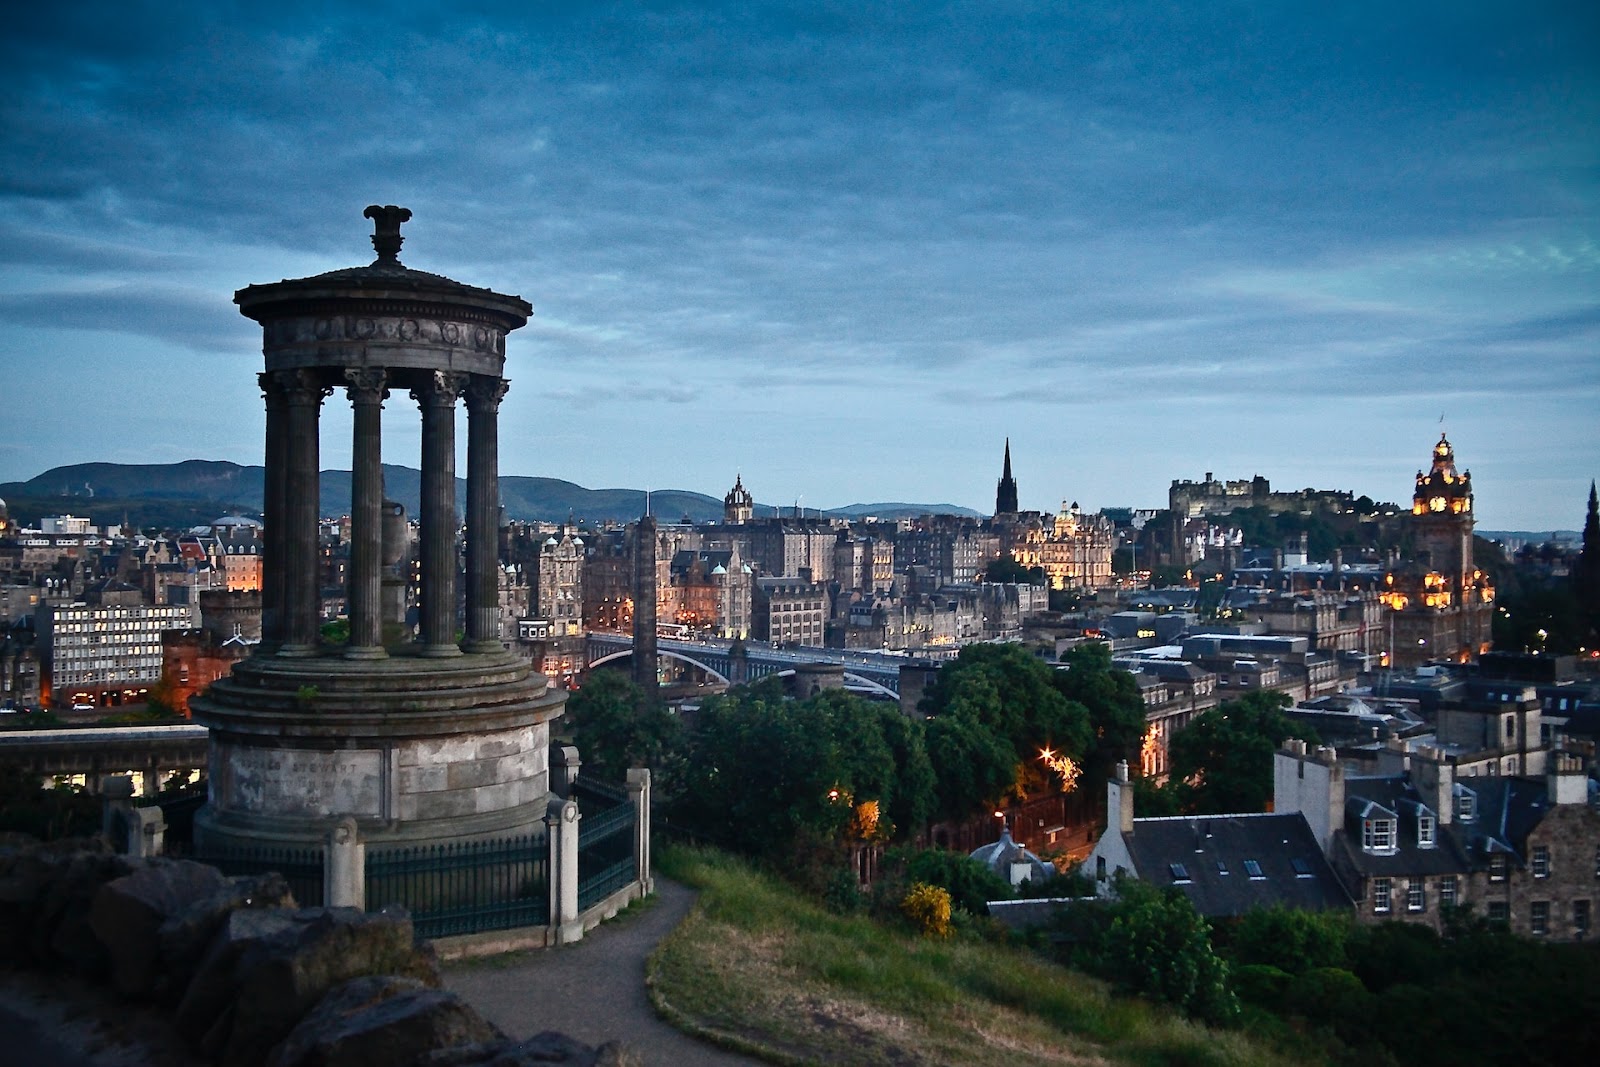 Edinburgh - Honeymoon Destinations in the UK - Minstrel Court